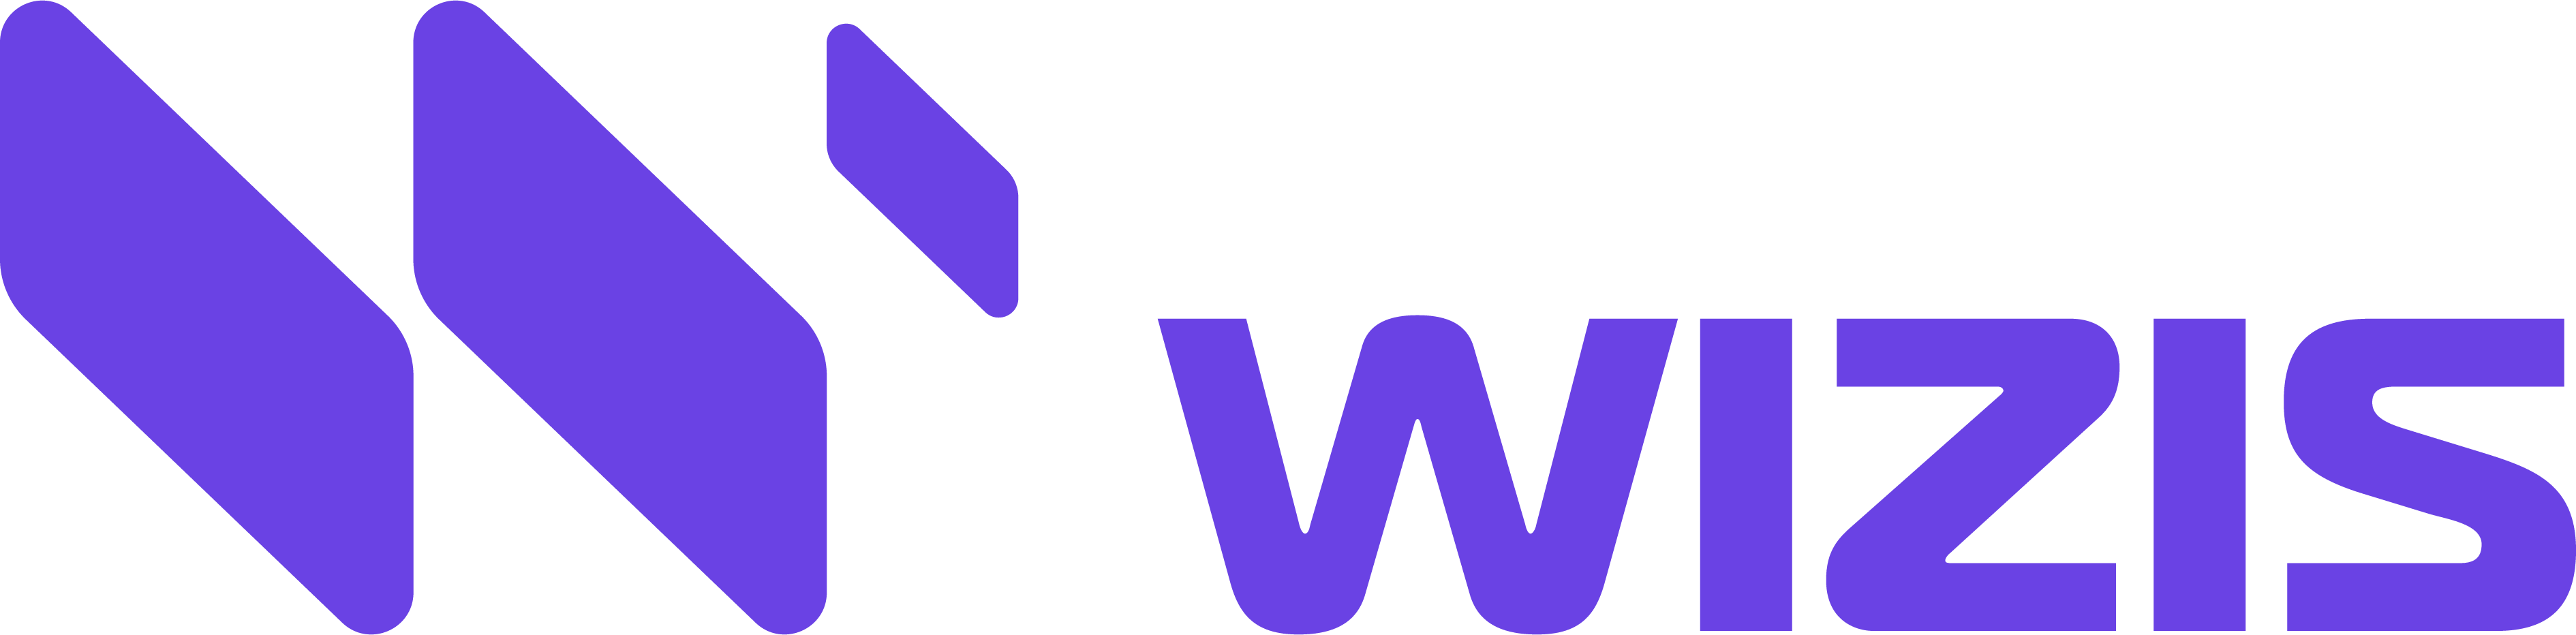 Logo da Wizis para tela mobile